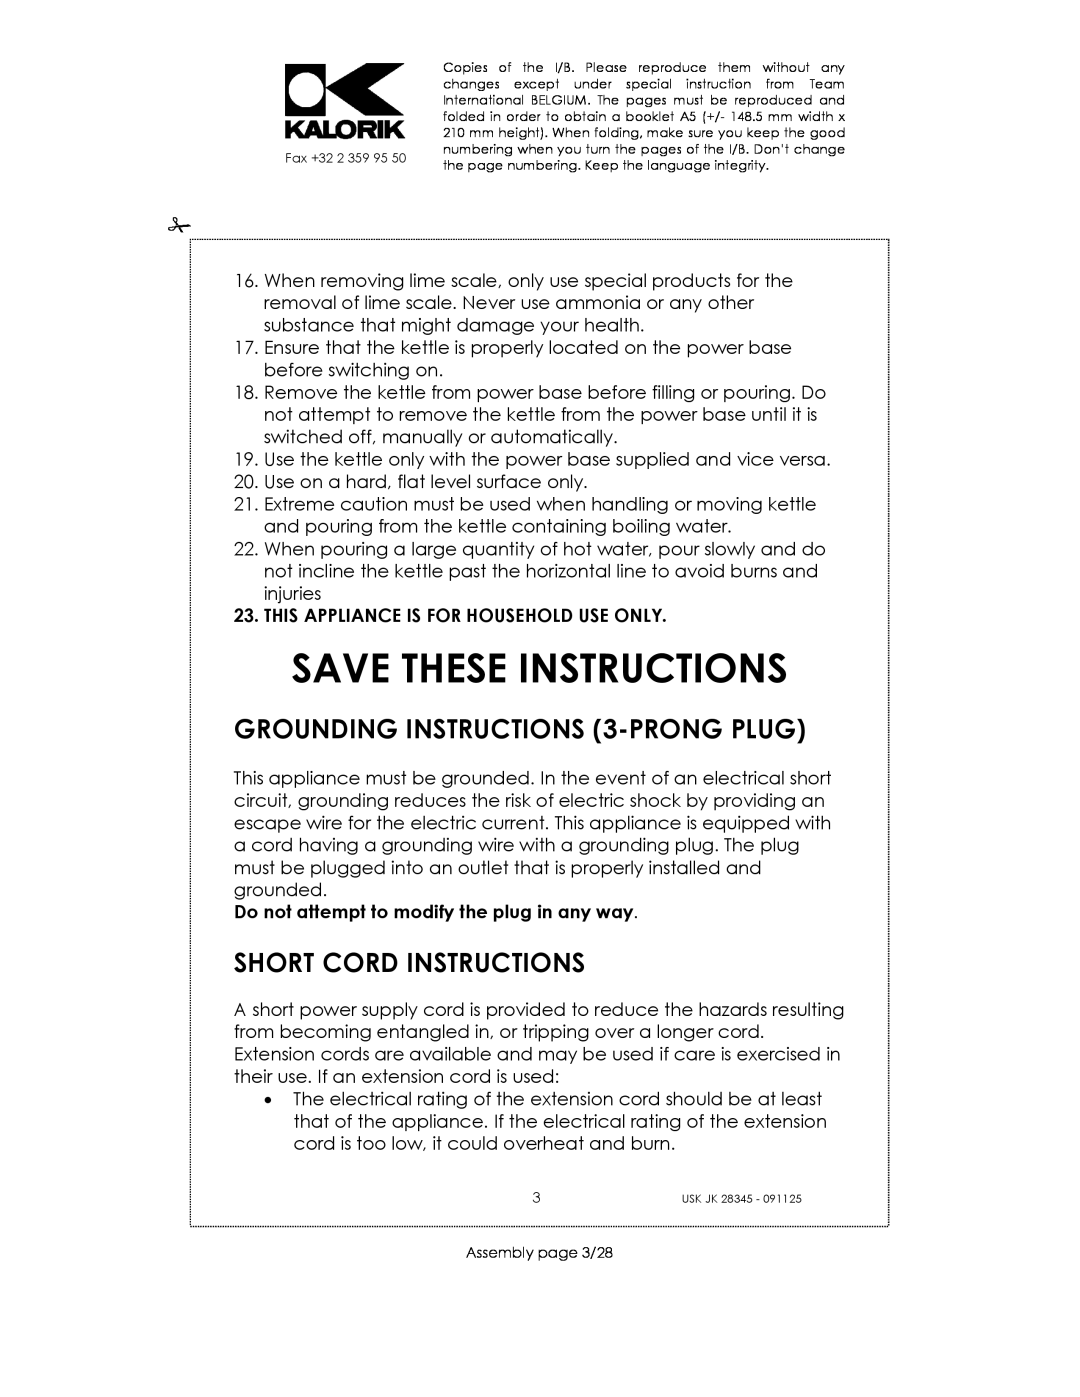 Kalorik USK JK 28345 manual Save These Instructions, GROUNDING INSTRUCTIONS 3-PRONGPLUG, Short Cord Instructions 